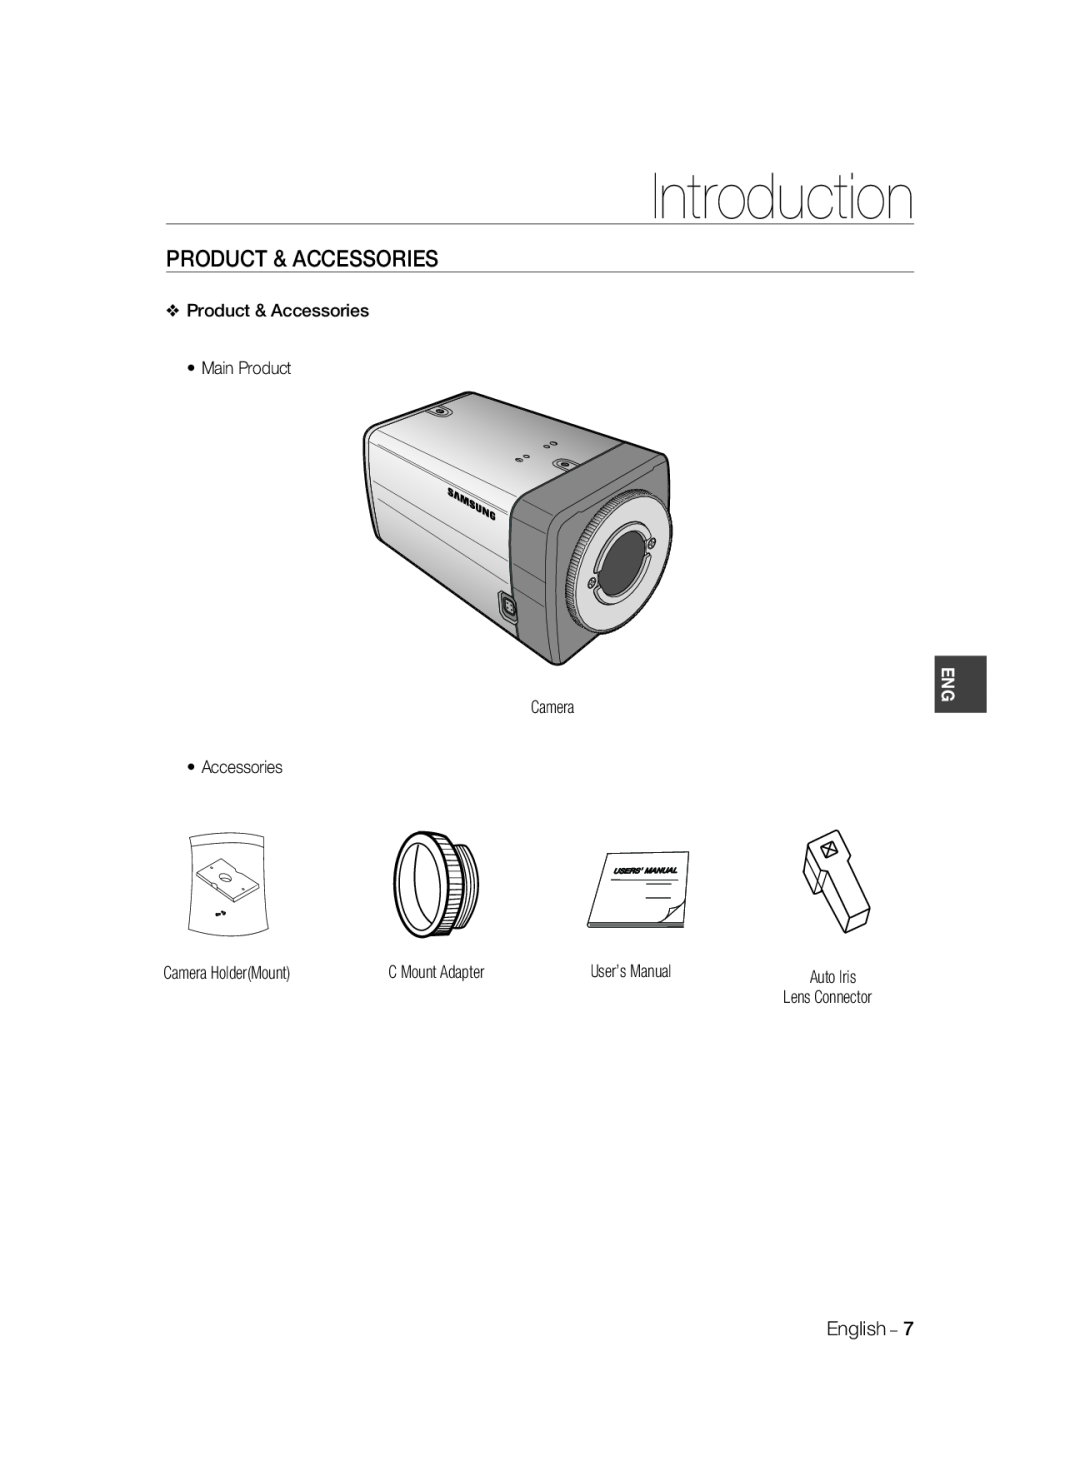 Samsung SCC-B2037P, SCC-B2337P manual Product & Accessories, Introduction, Auto Iris 